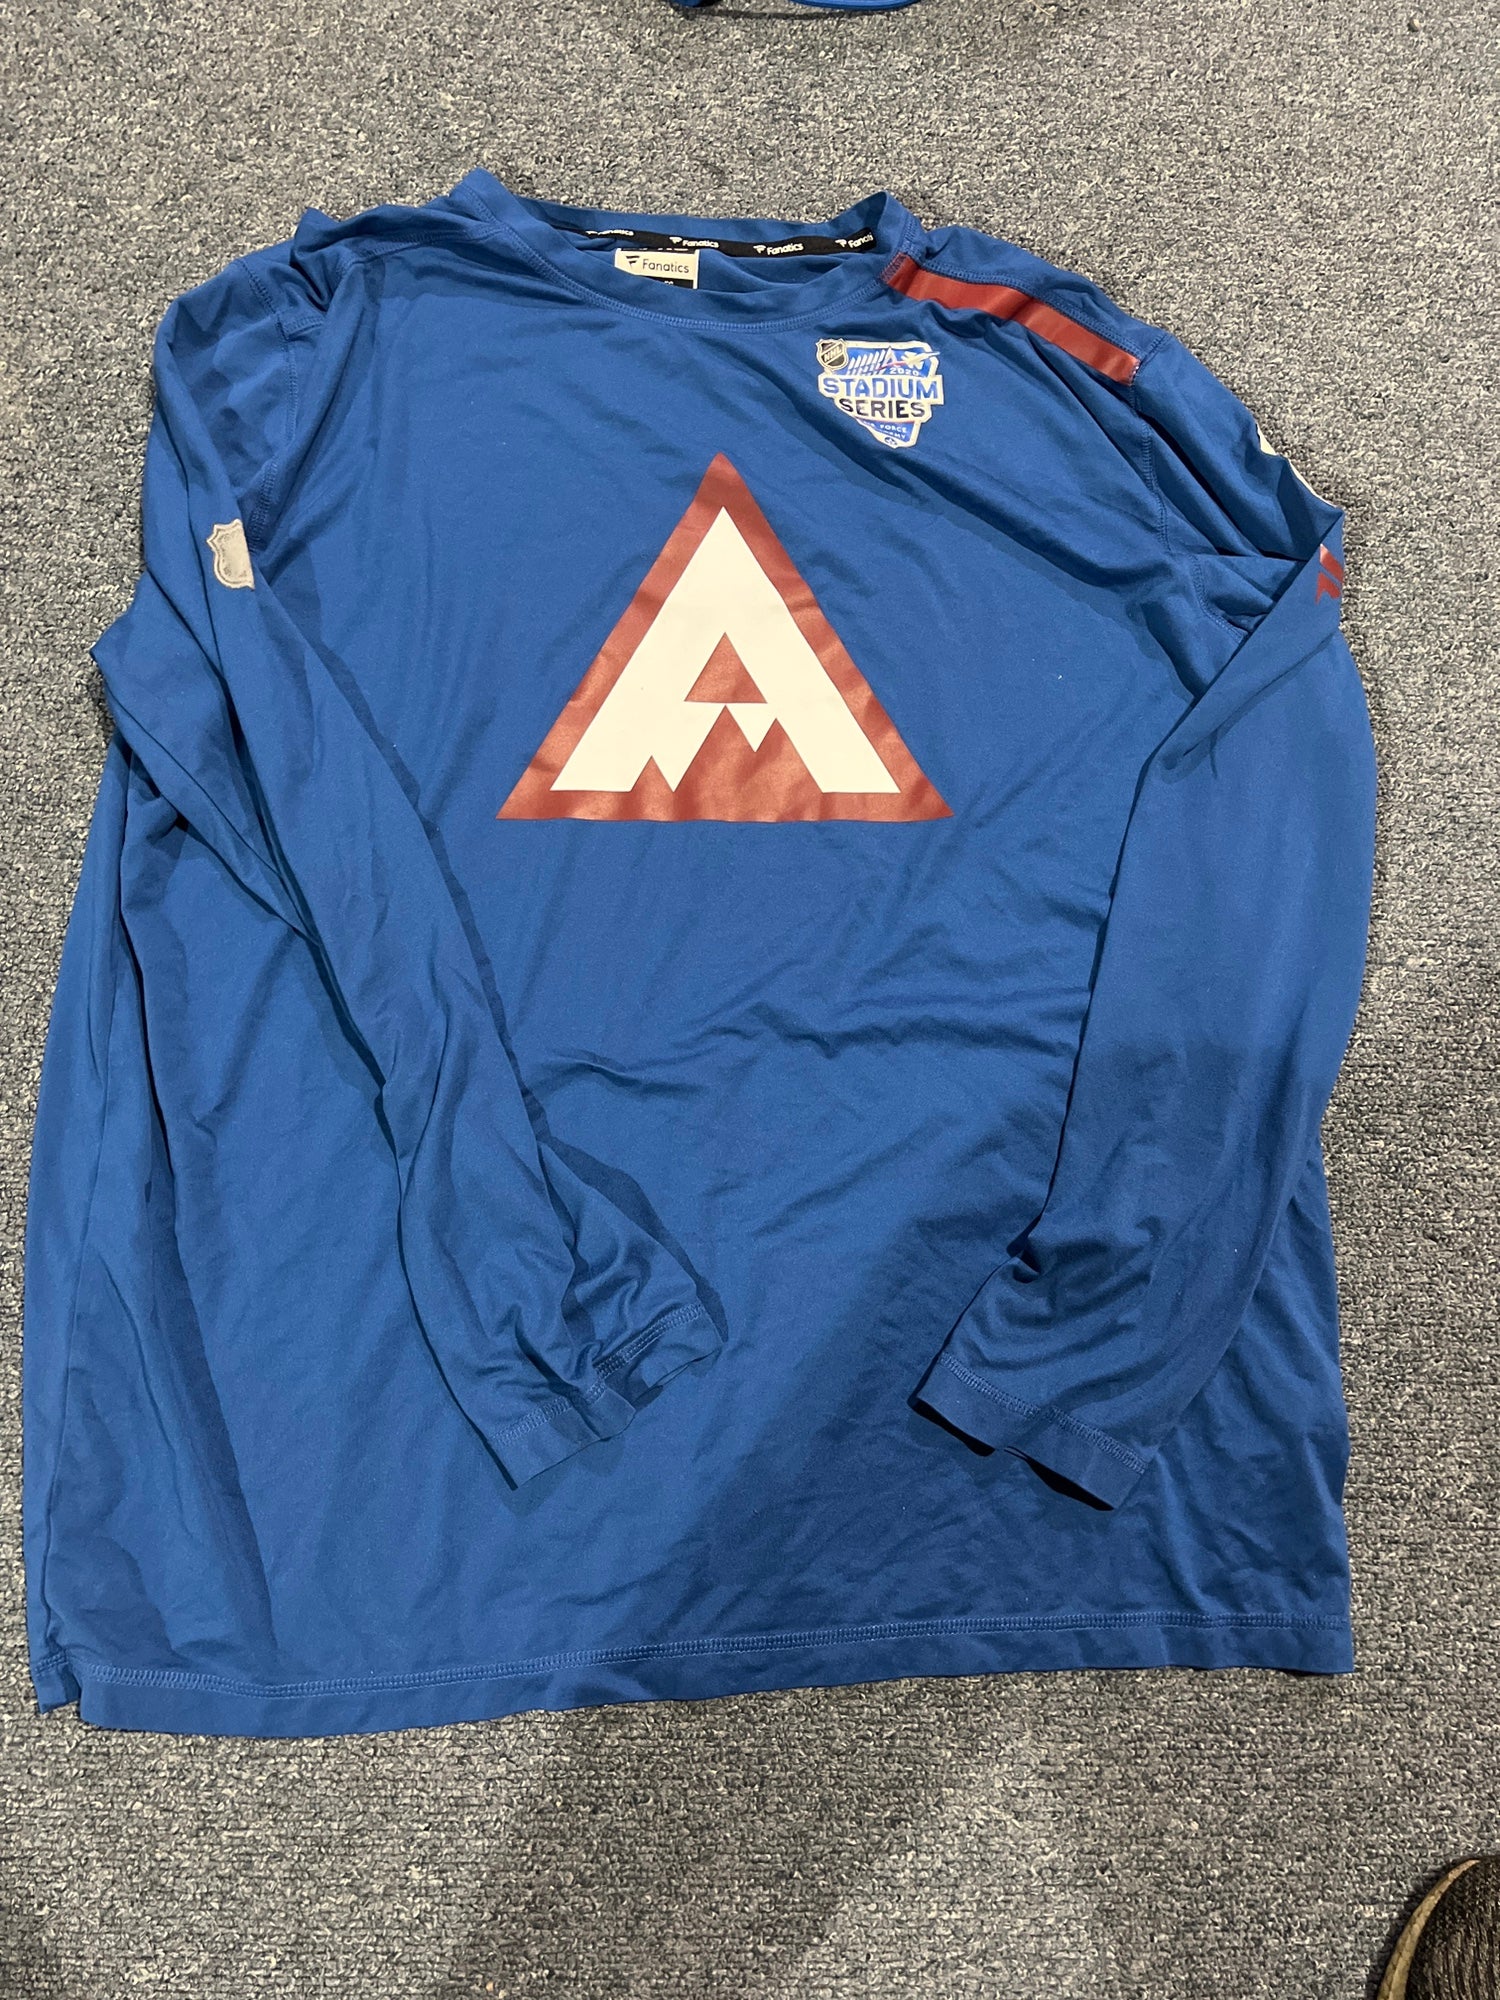 Mikko Rantanen 96 Colorado Avalanche Fanatics Authentic Pro Shirt XL Player Issue NHL Allstar